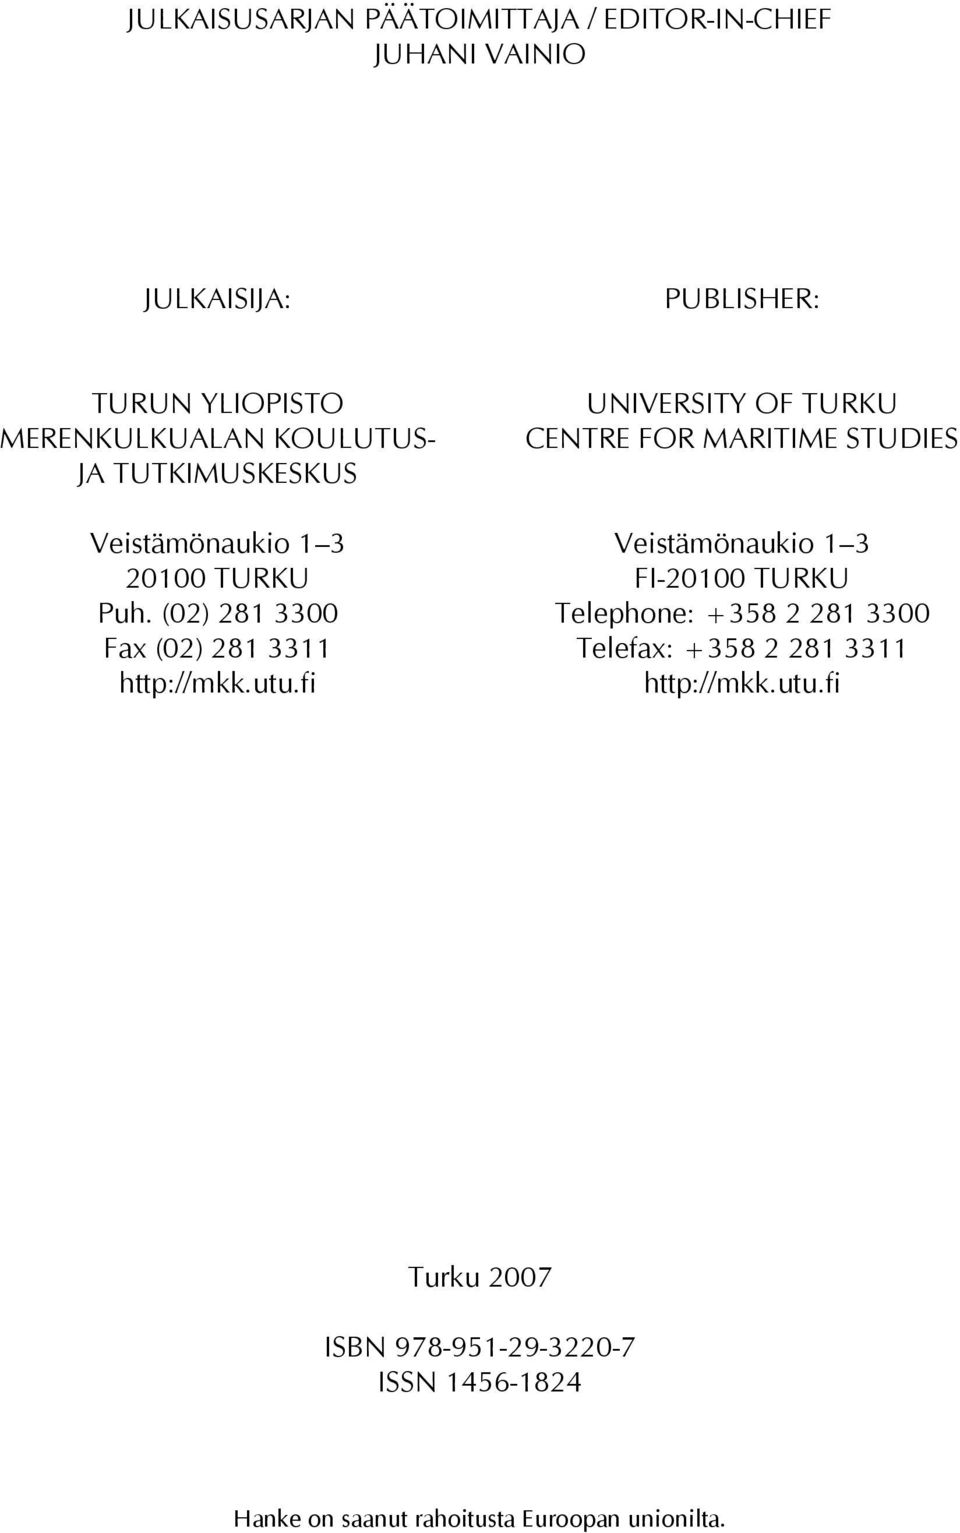 fi UNIVERSITY OF TURKU CENTRE FOR MARITIME STUDIES Veistämönaukio 1 3 FI-20100 TURKU Telephone: +358 2 281 3300